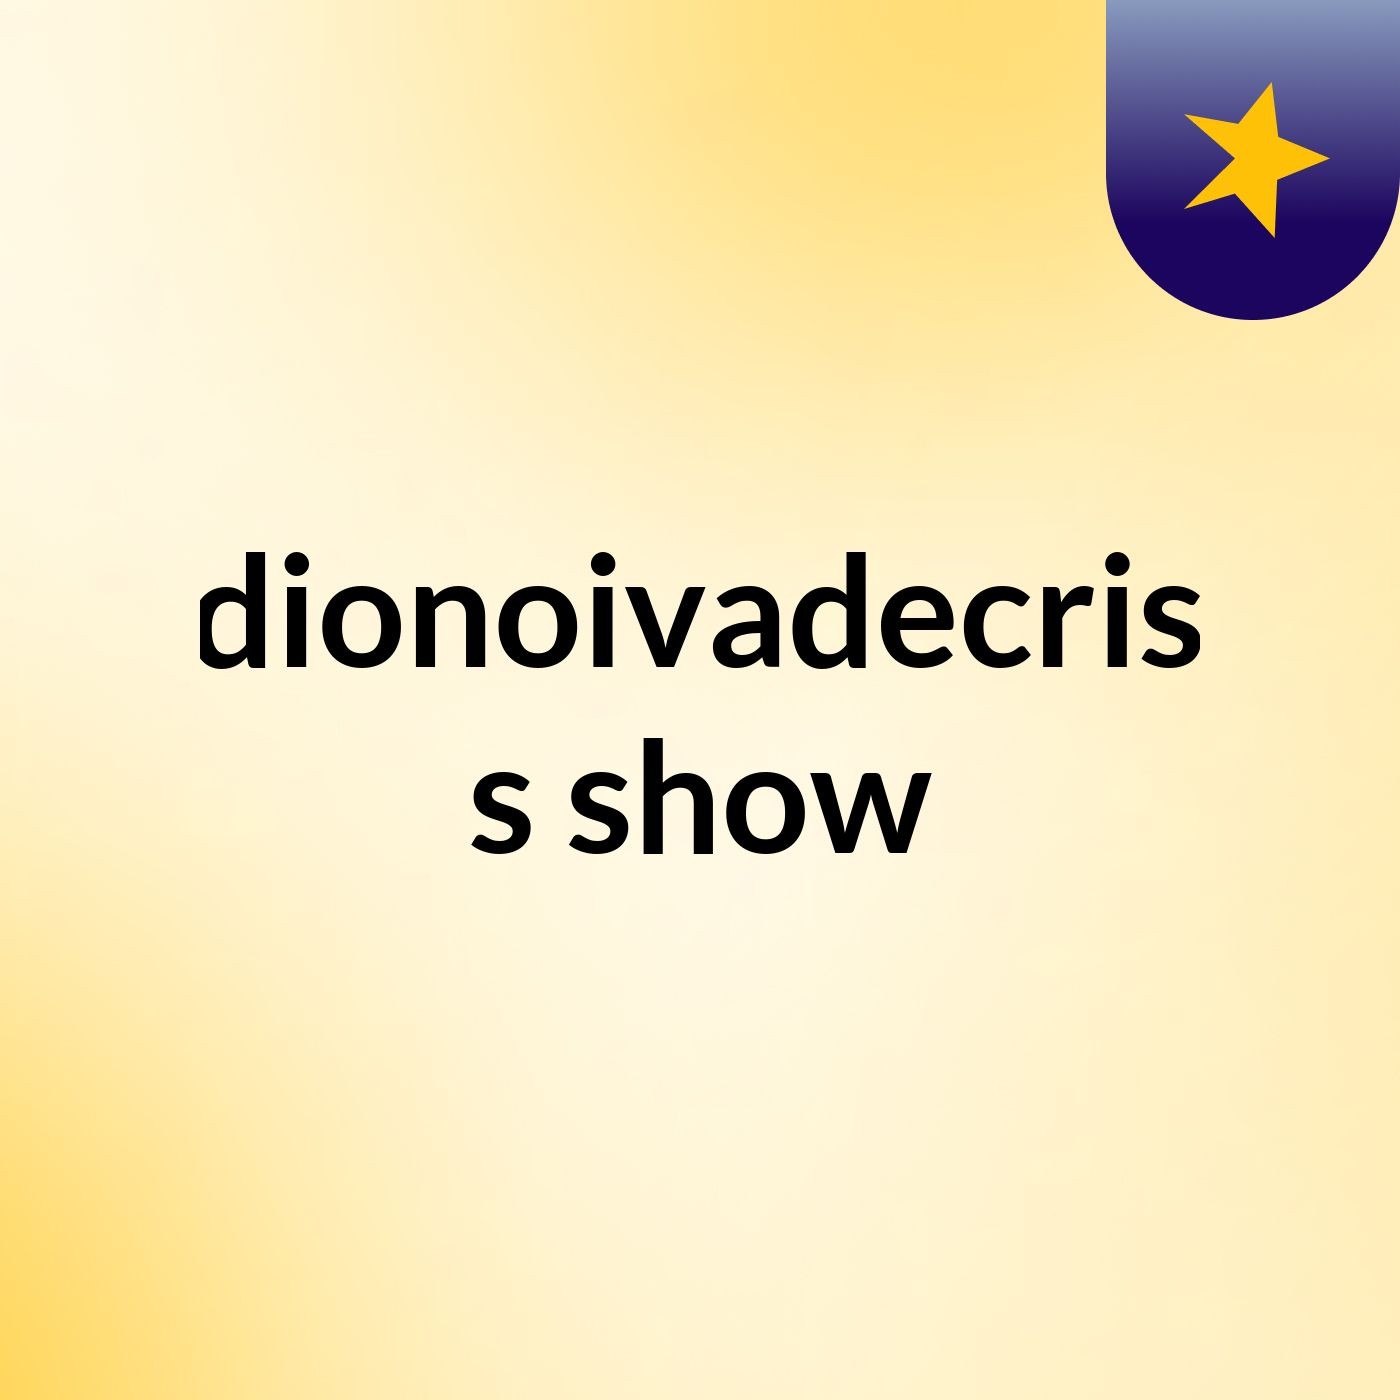 radionoivadecristo's show